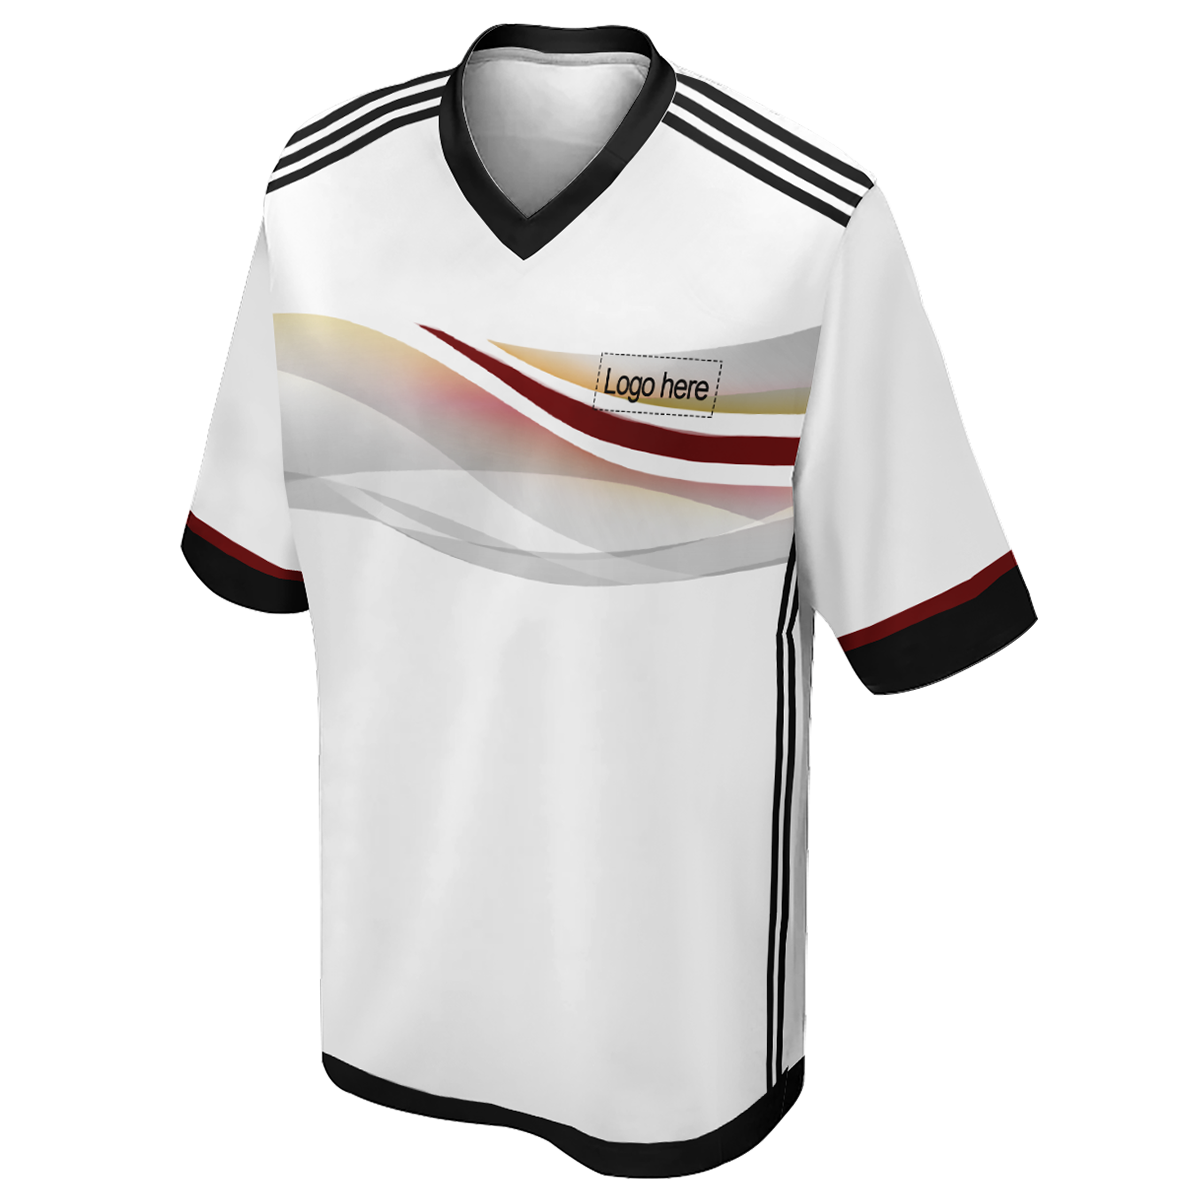 Camisa de futebol personalizada masculina autêntica da Copa do Mundo da Alemanha com nome